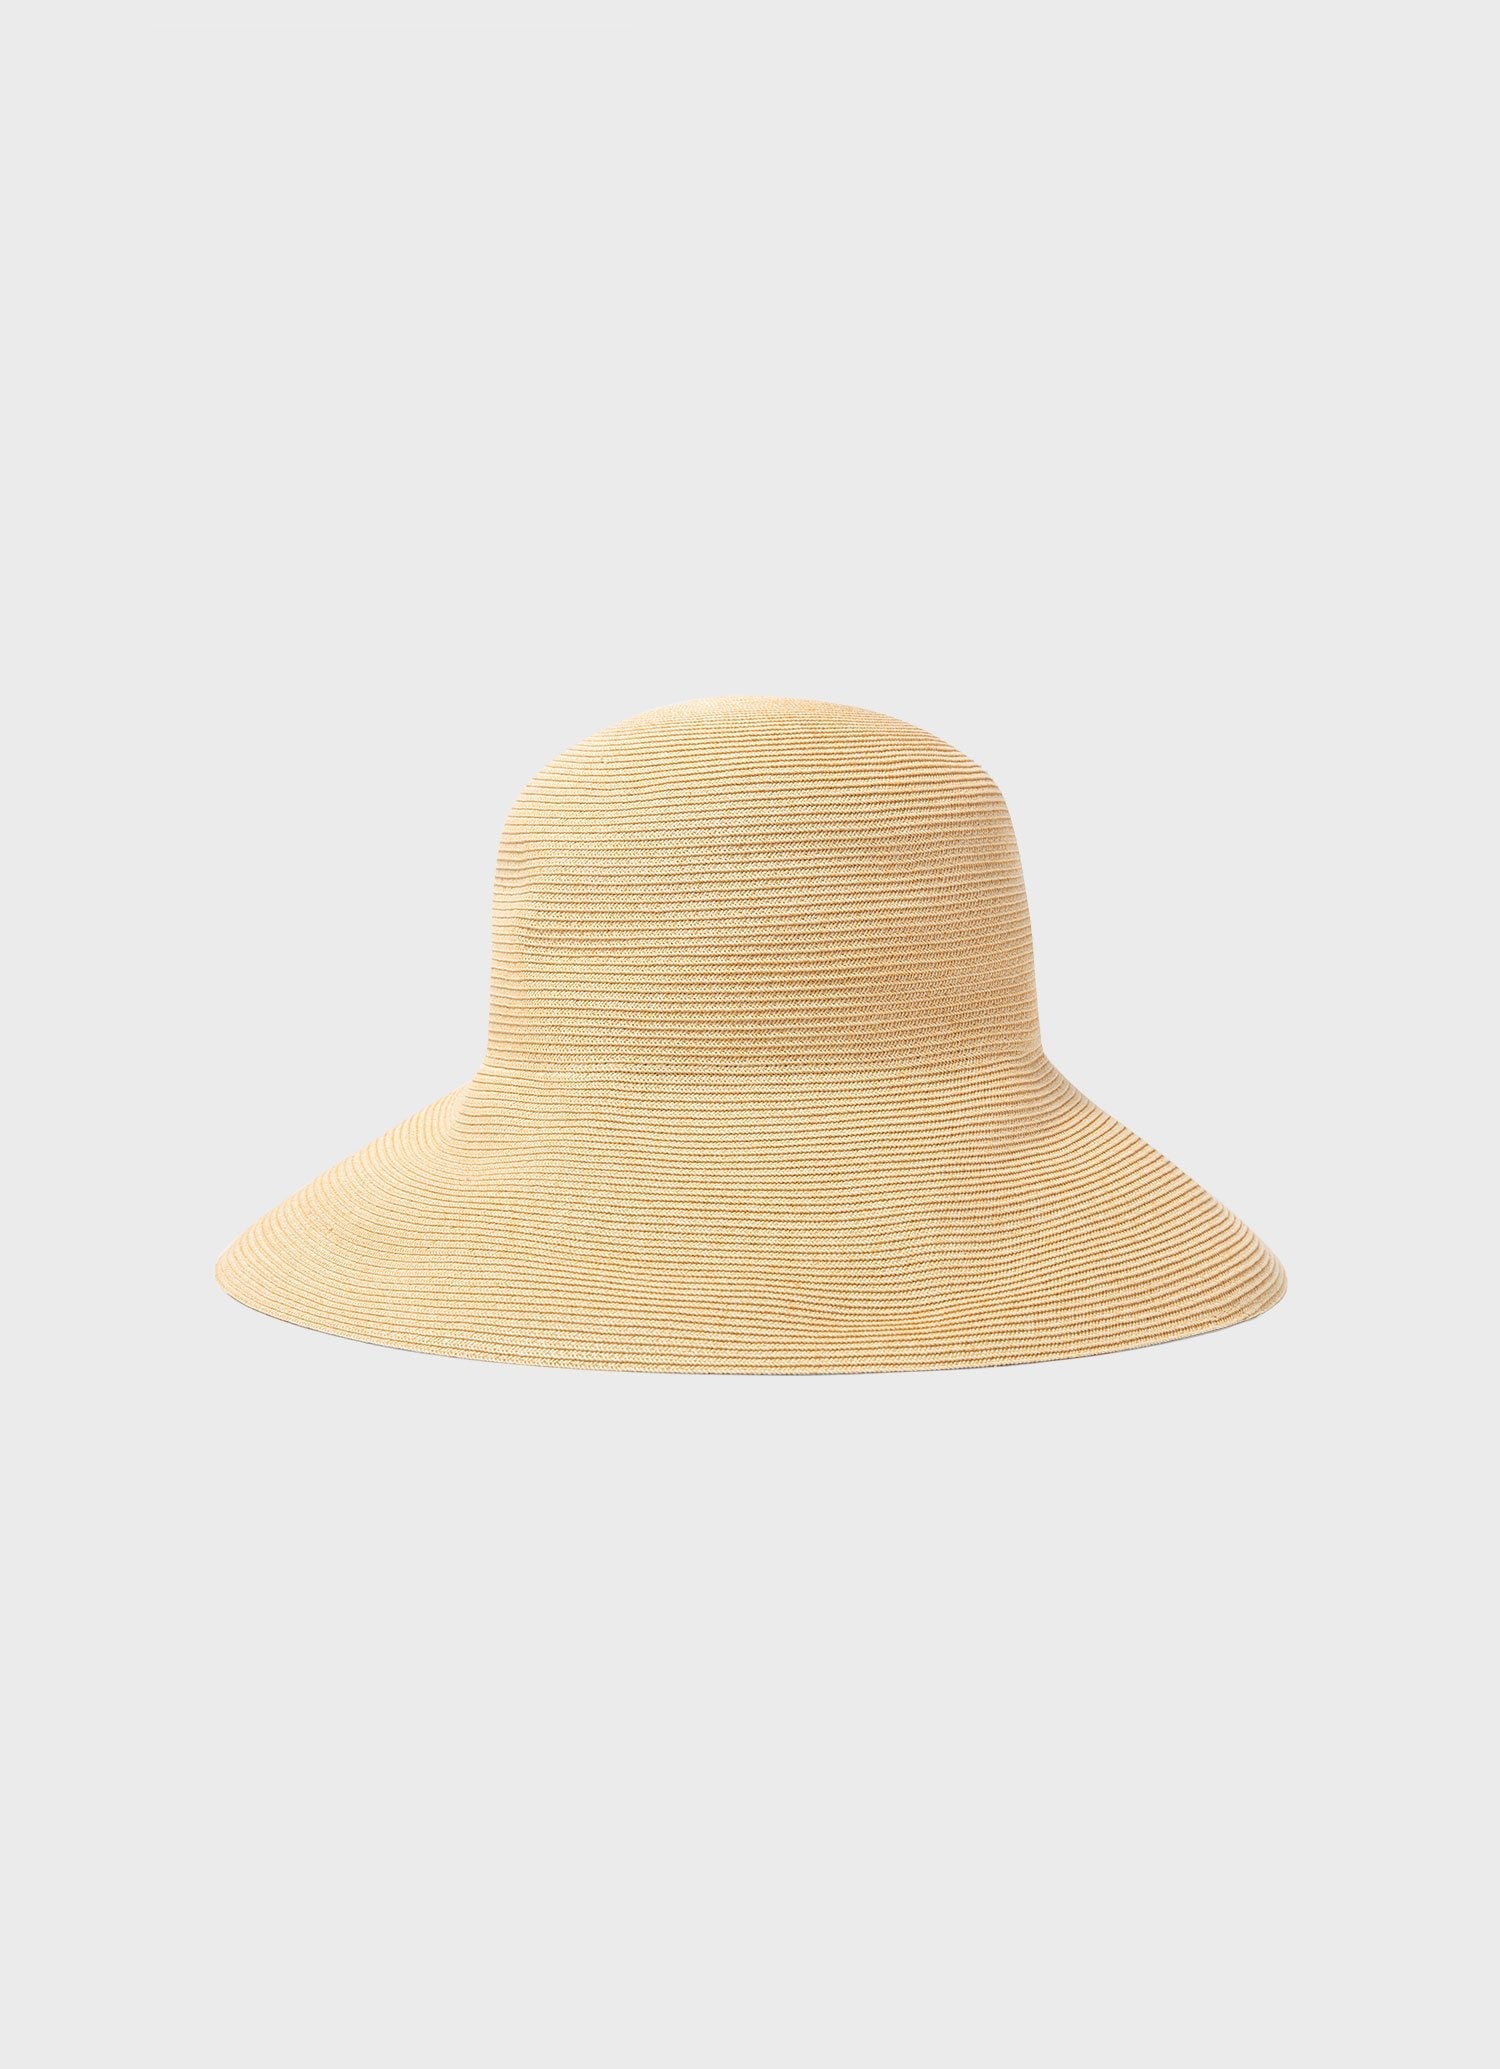 Kijima Takayuki and Sunspel Wide Brim Paper Hat in Natural Sunspel